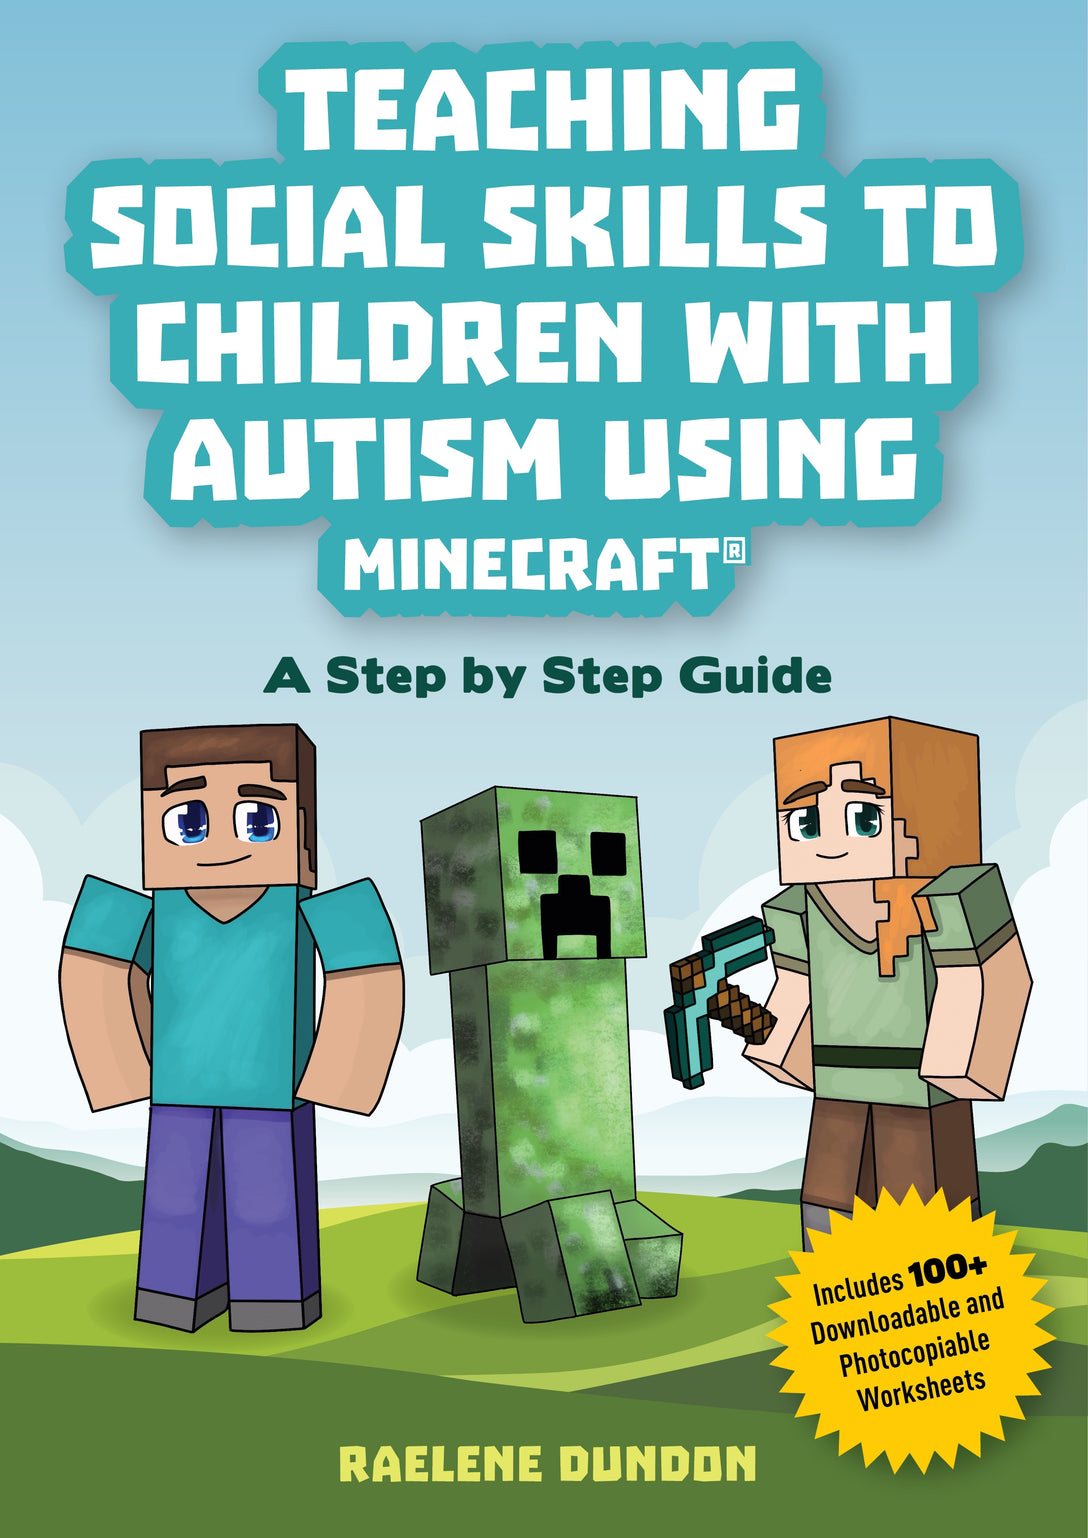 Teaching Social Skills to Children with Autism Using Minecraft® by Chloe-Amber Scott, Raelene Dundon